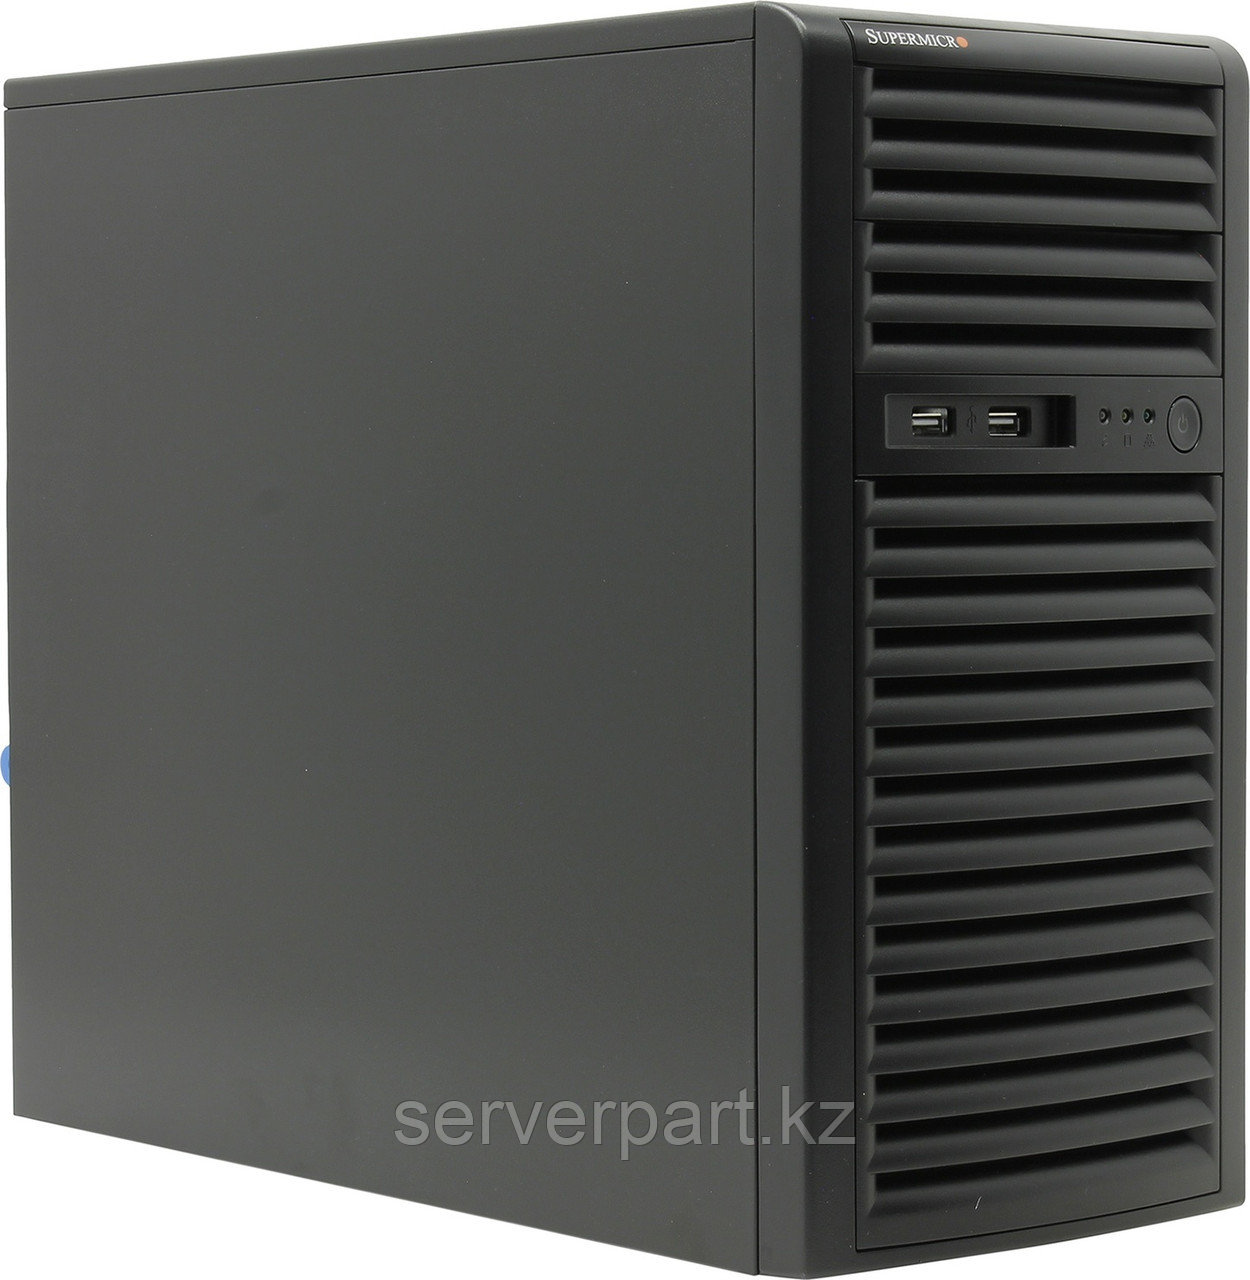 Сервер Supermicro SYS-5039D Tower/4-core intel xeon E3-1220v6 3GHz/16GB EUDIMM/1x240GB SSD MU Hyb, фото 1